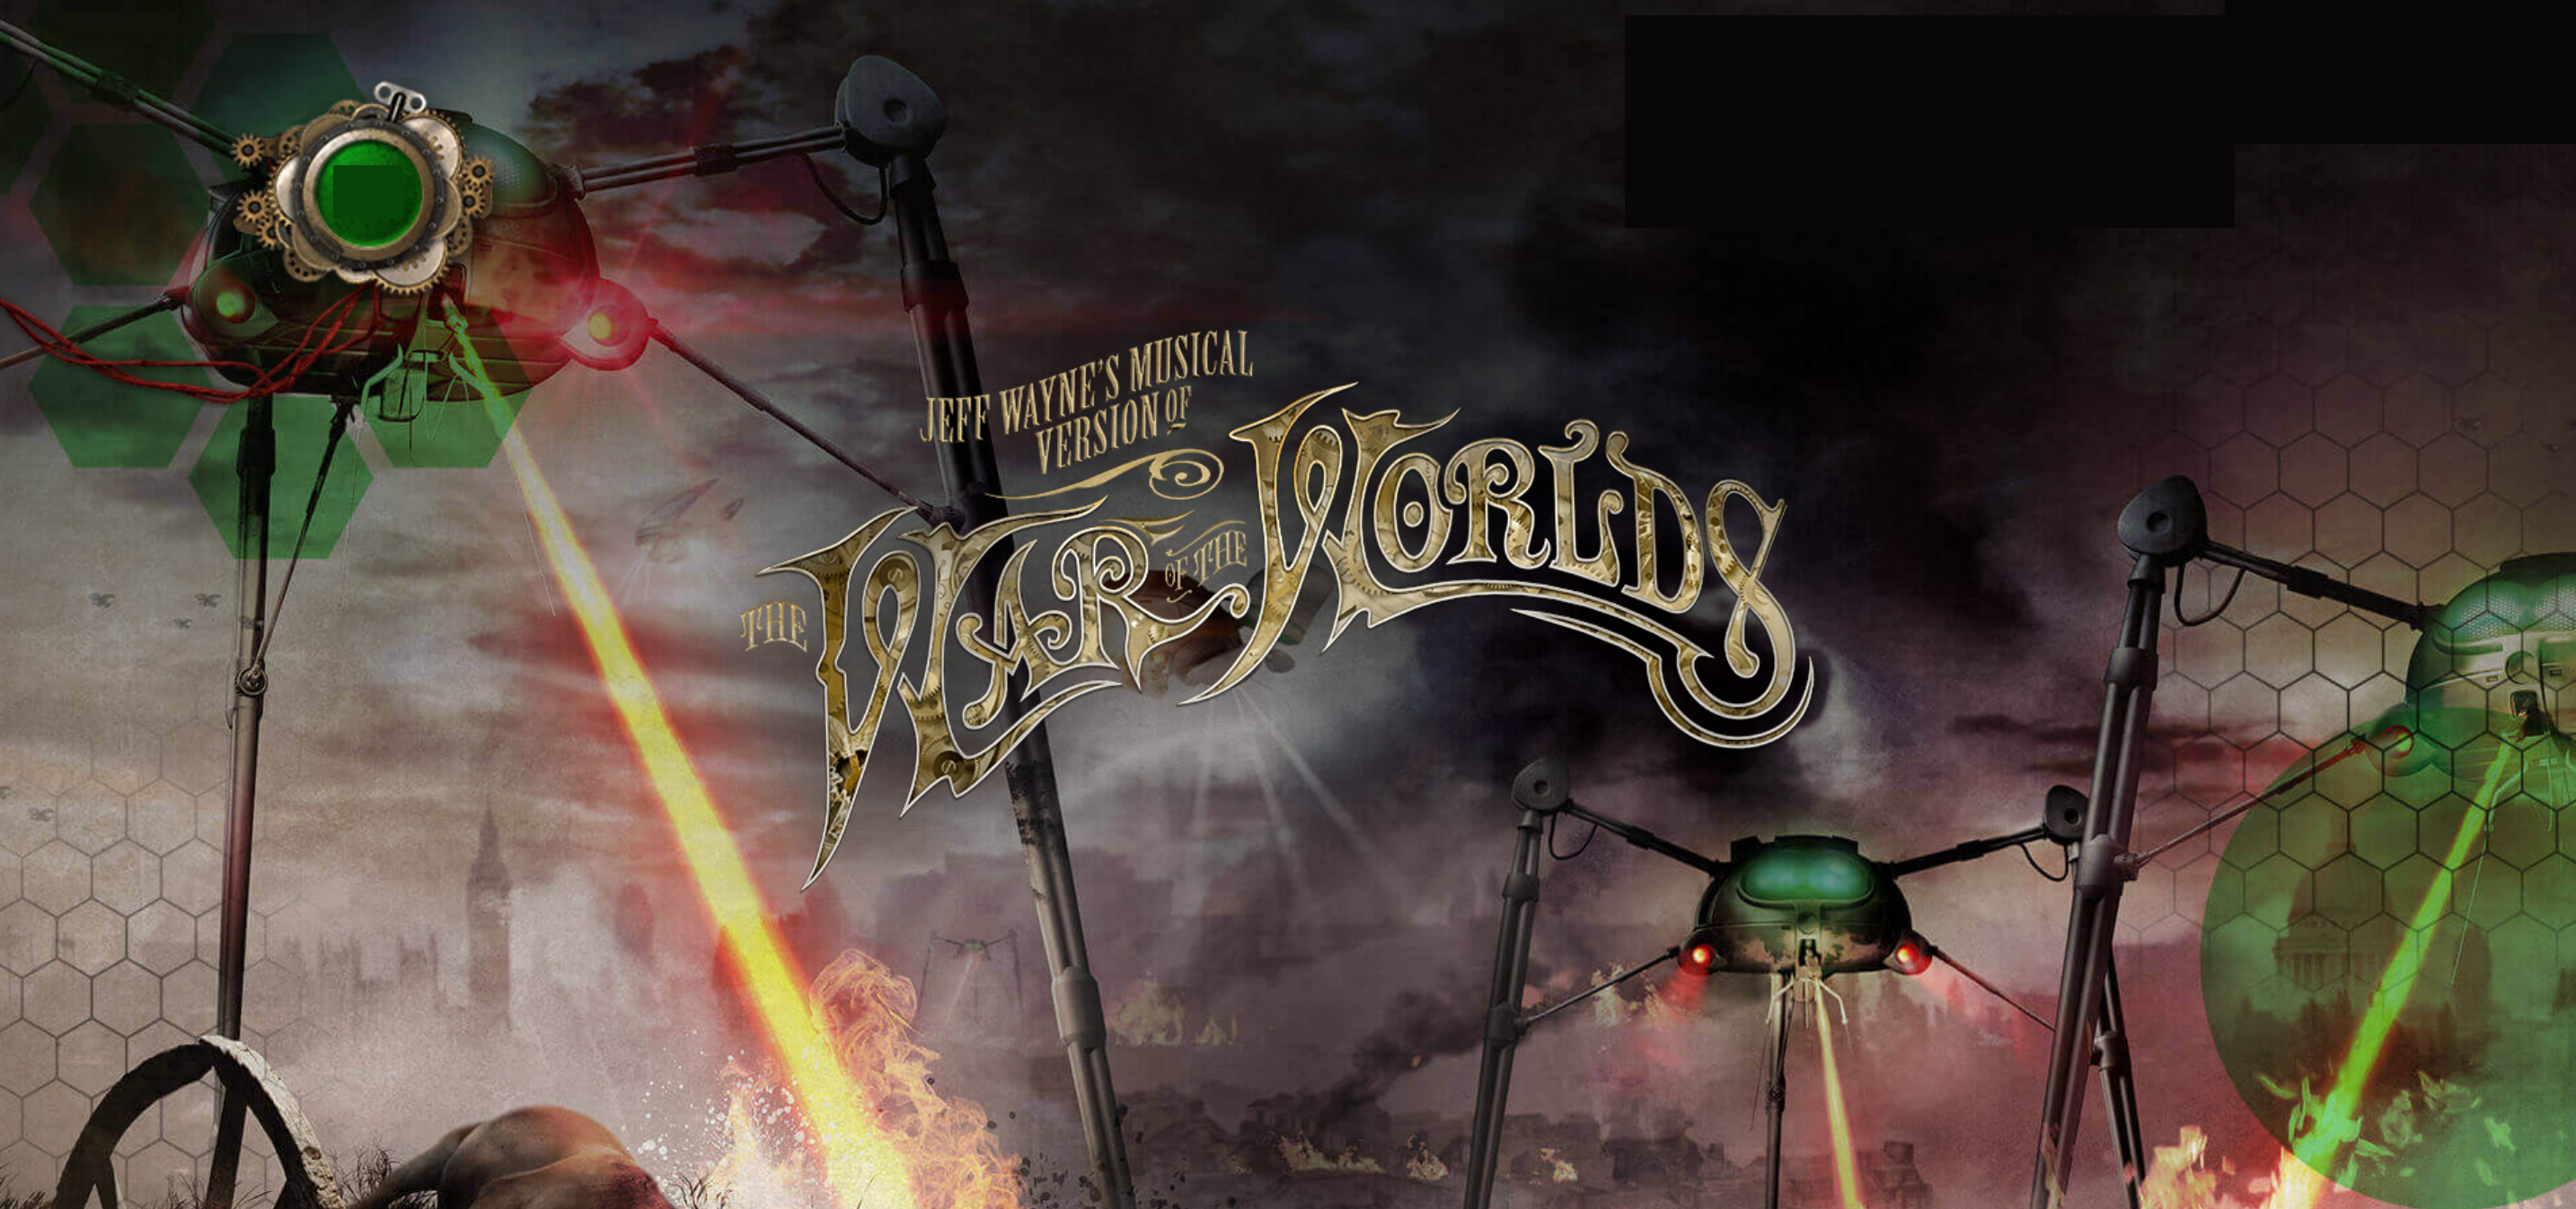 Jeff Wayne’s Musical Versie of the War of the Worlds